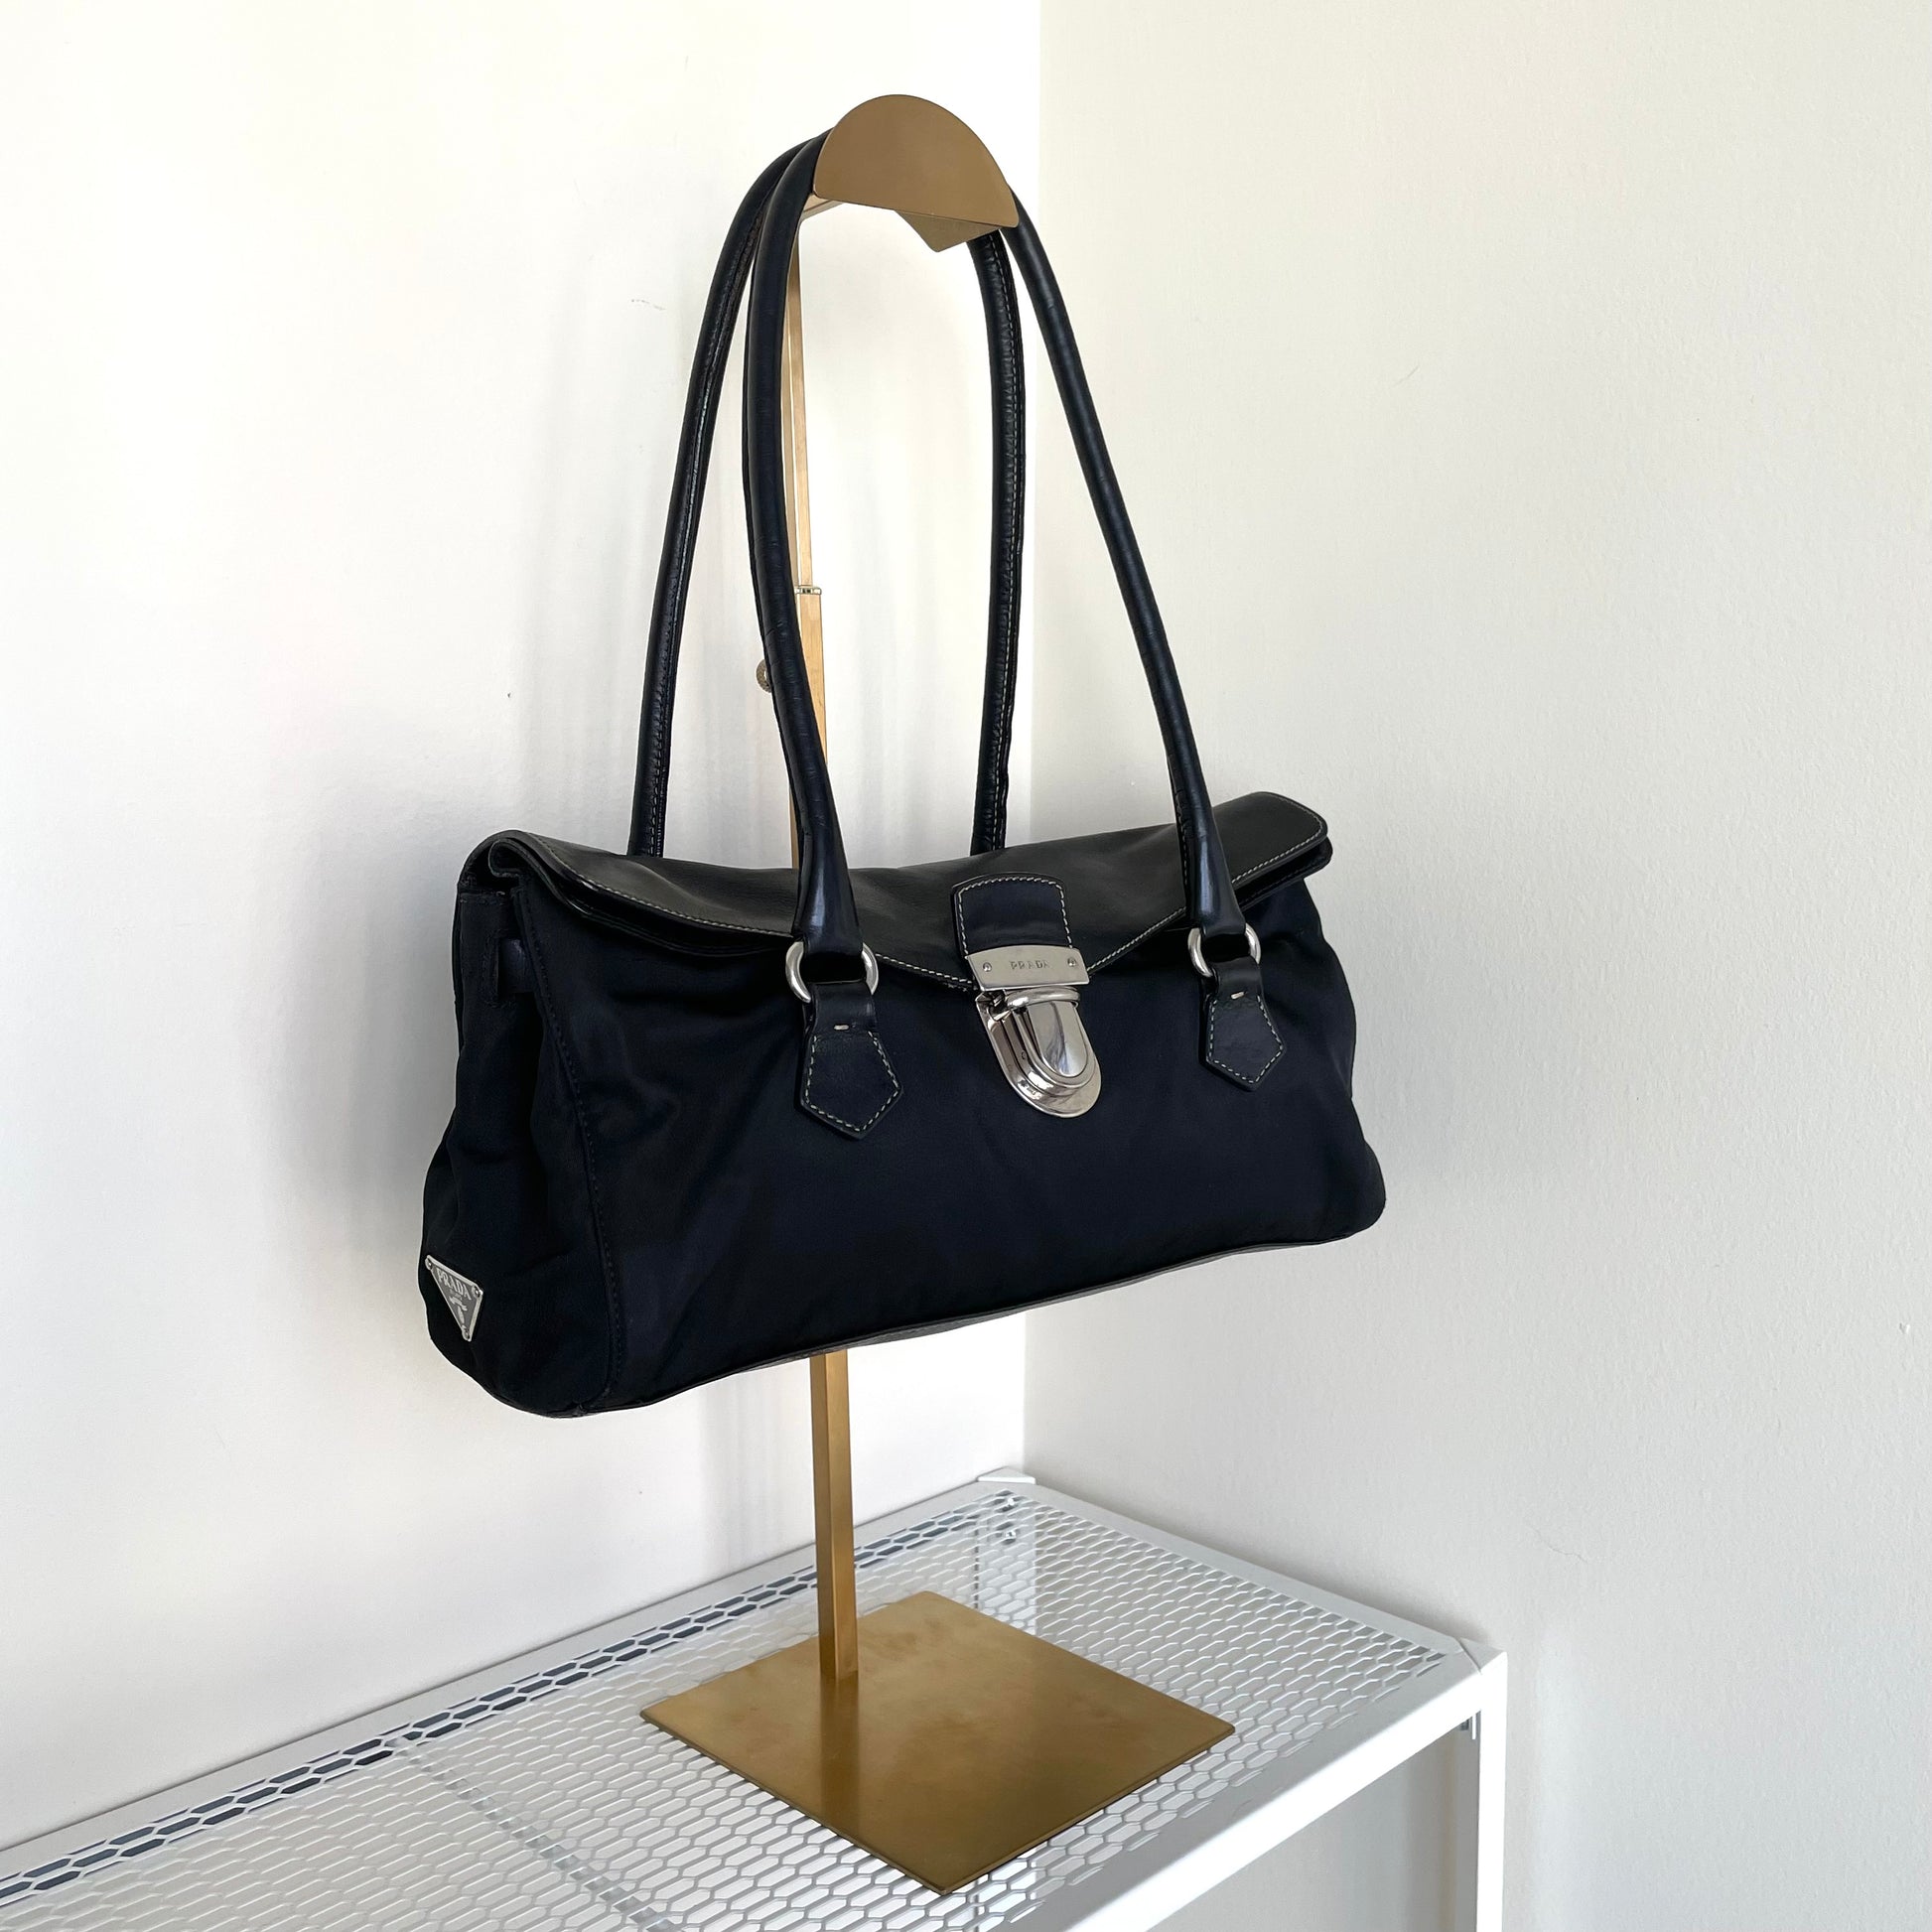 PRADA Tessuto Nylon & Leather Shoulder Bag